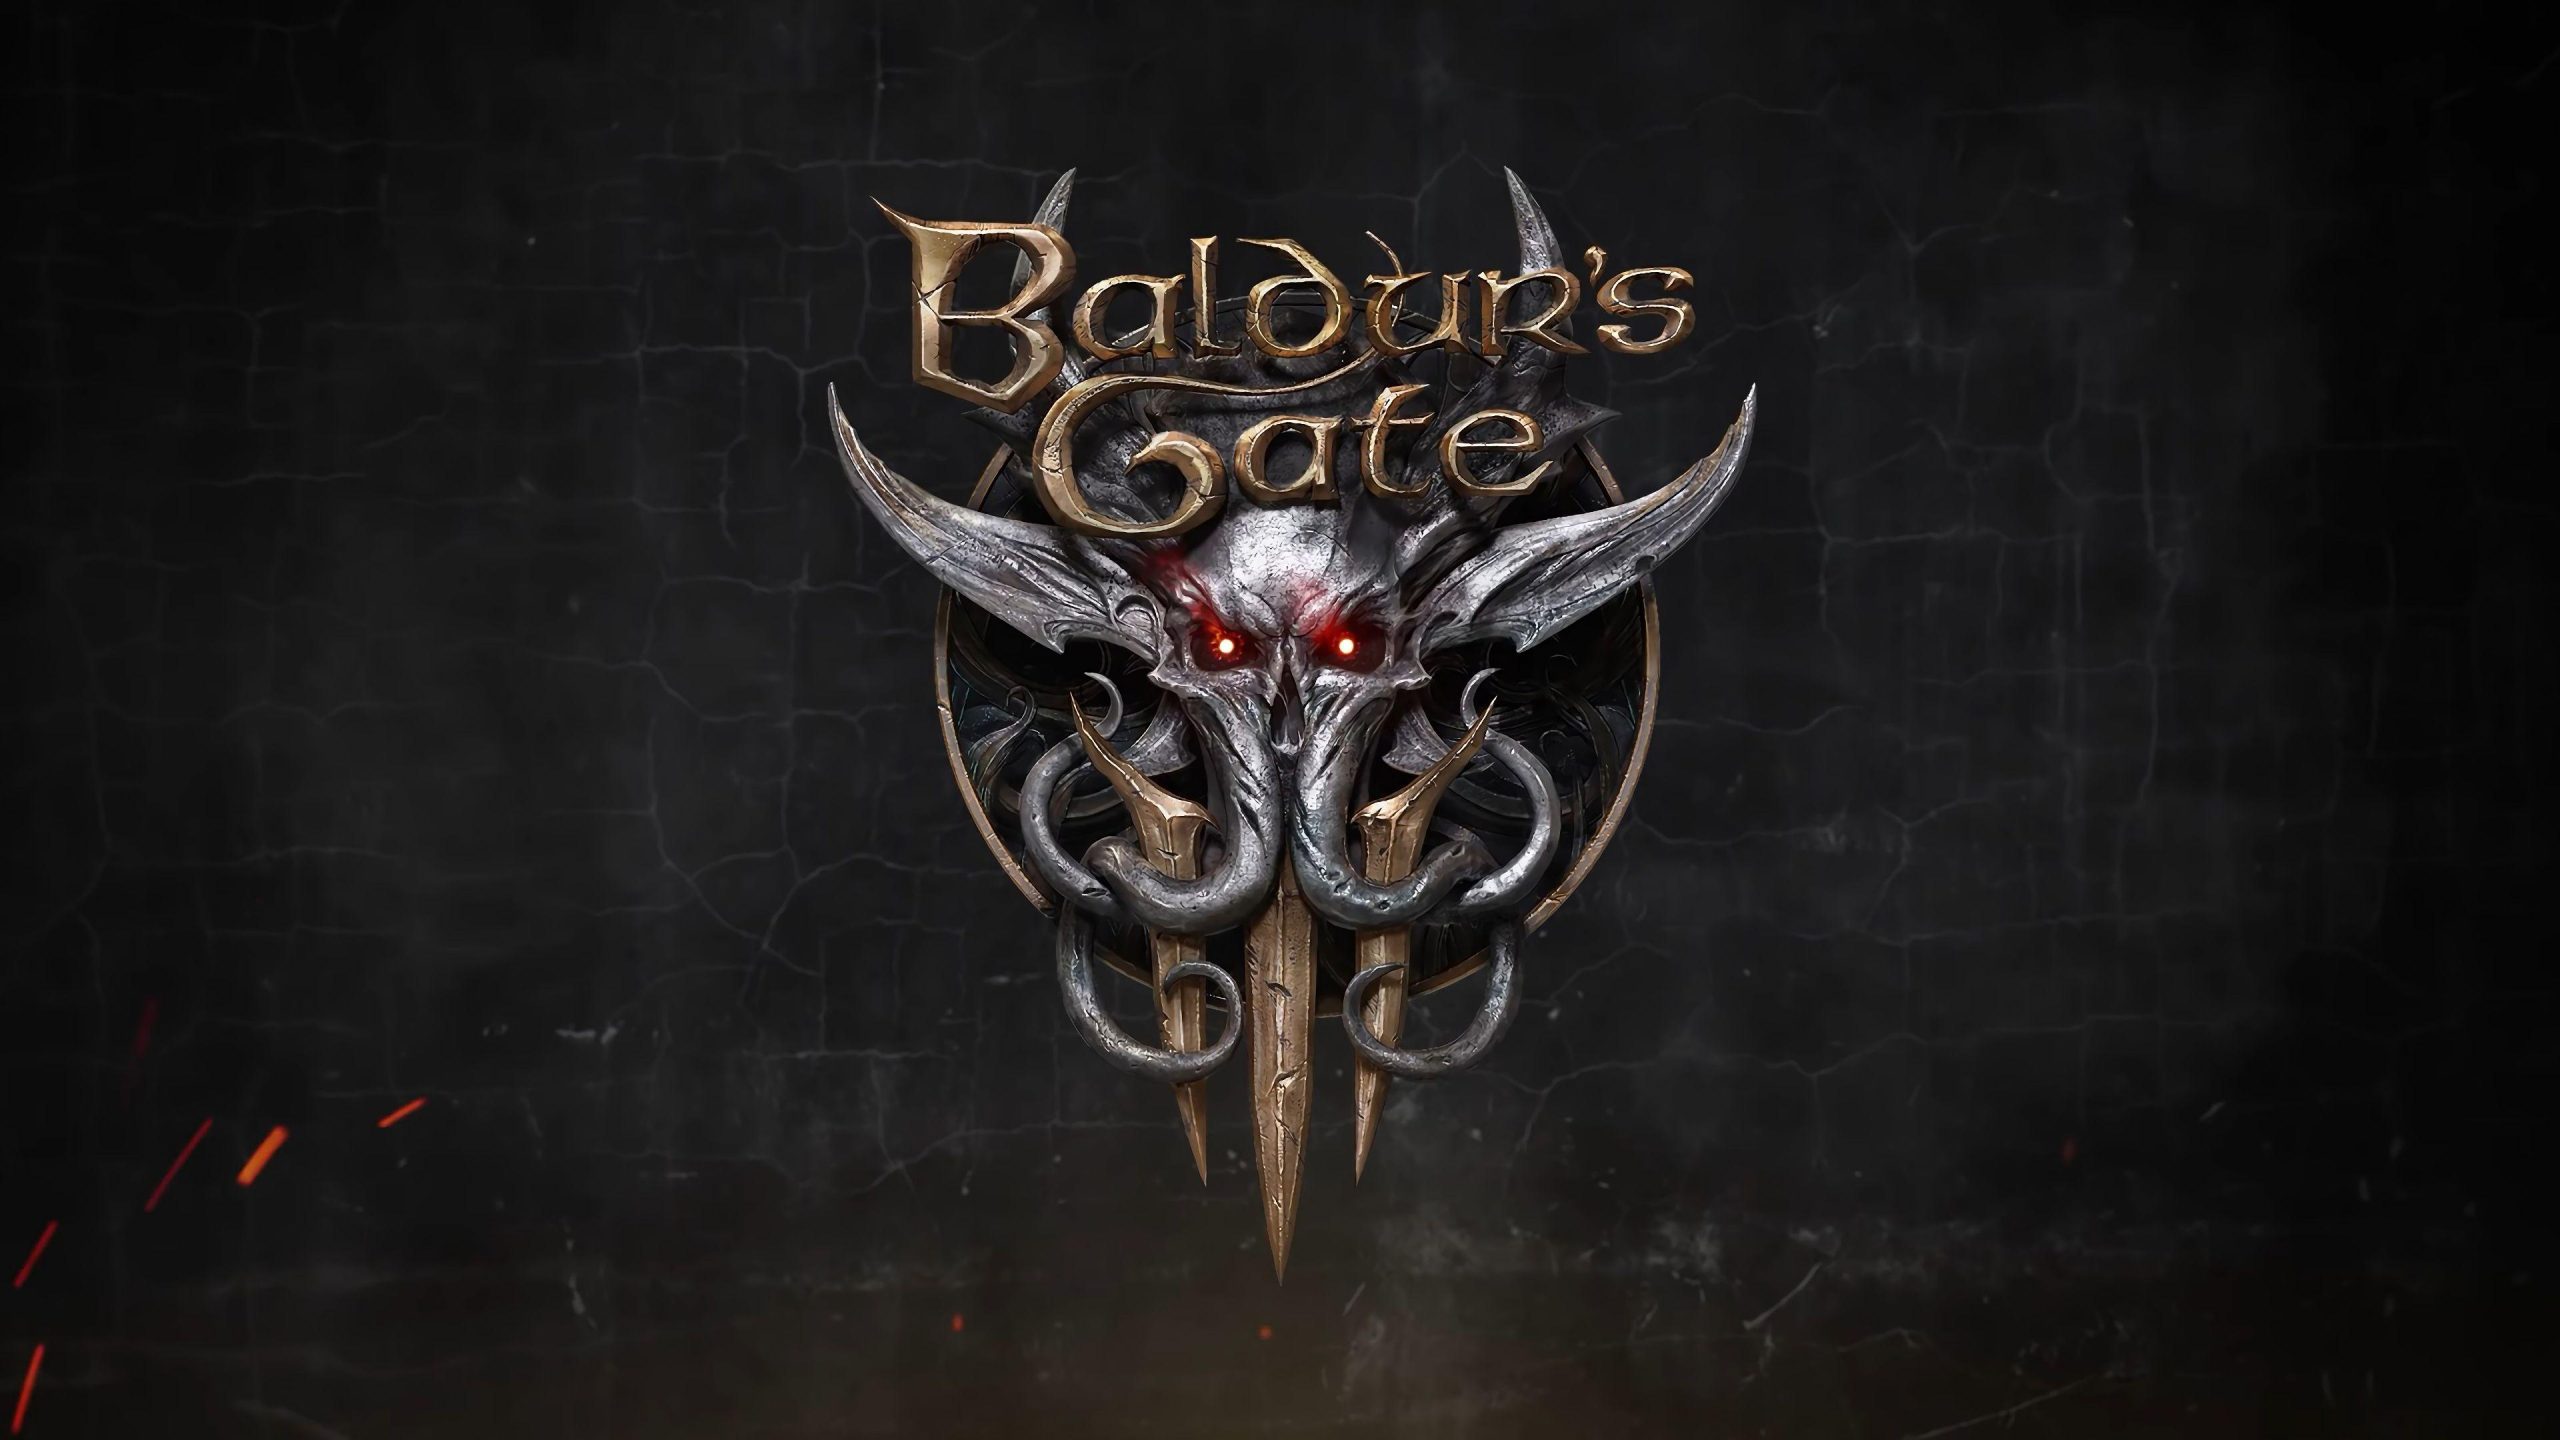 Baldur’s Gate III Hd Wallpaper